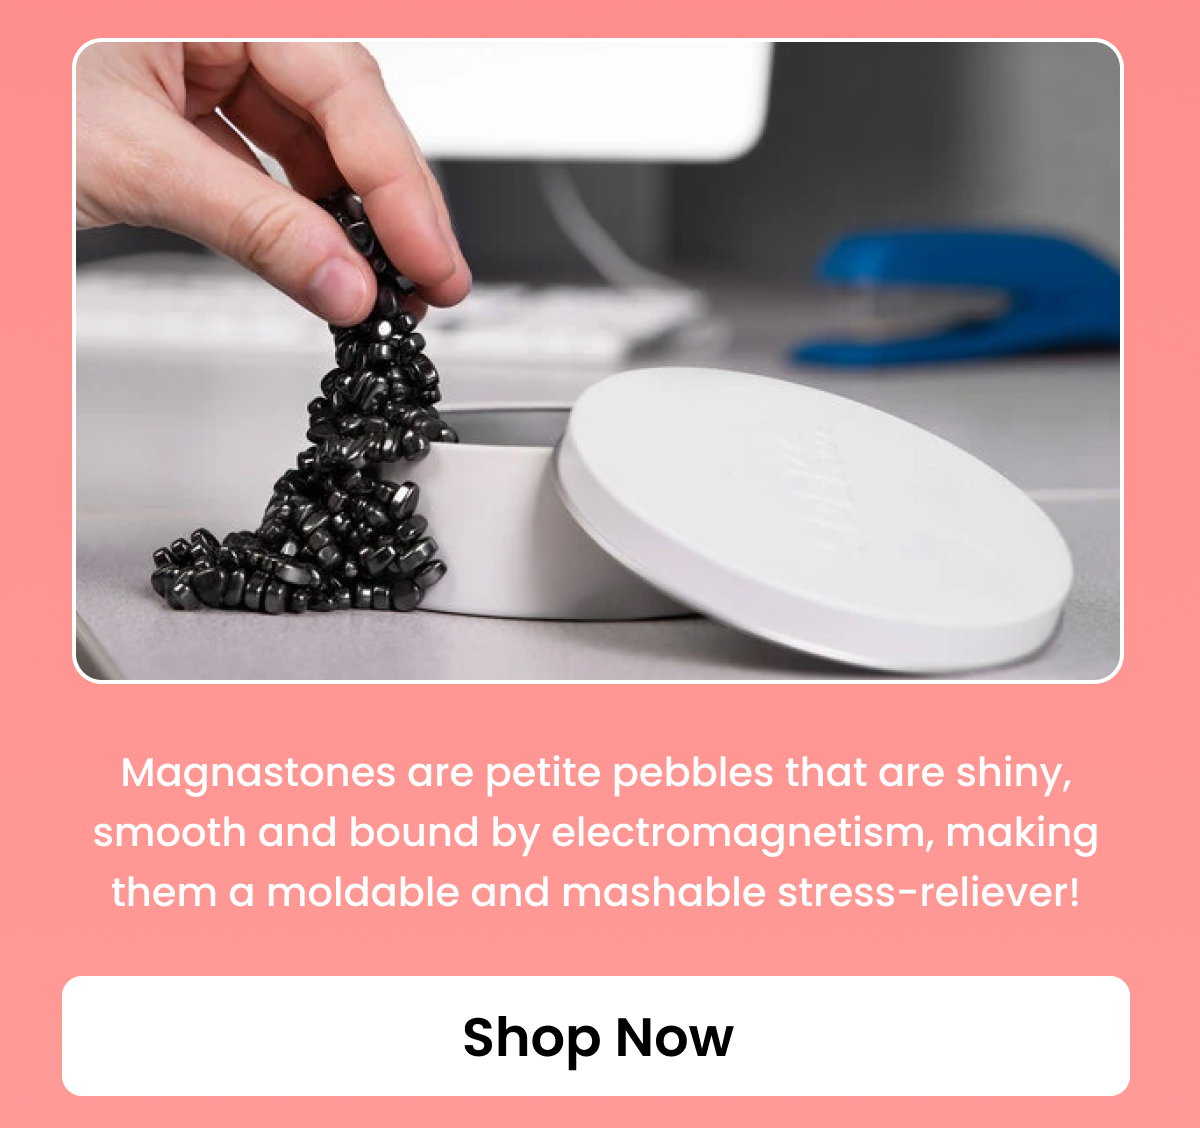 Magnastones Magnetic Pebbles